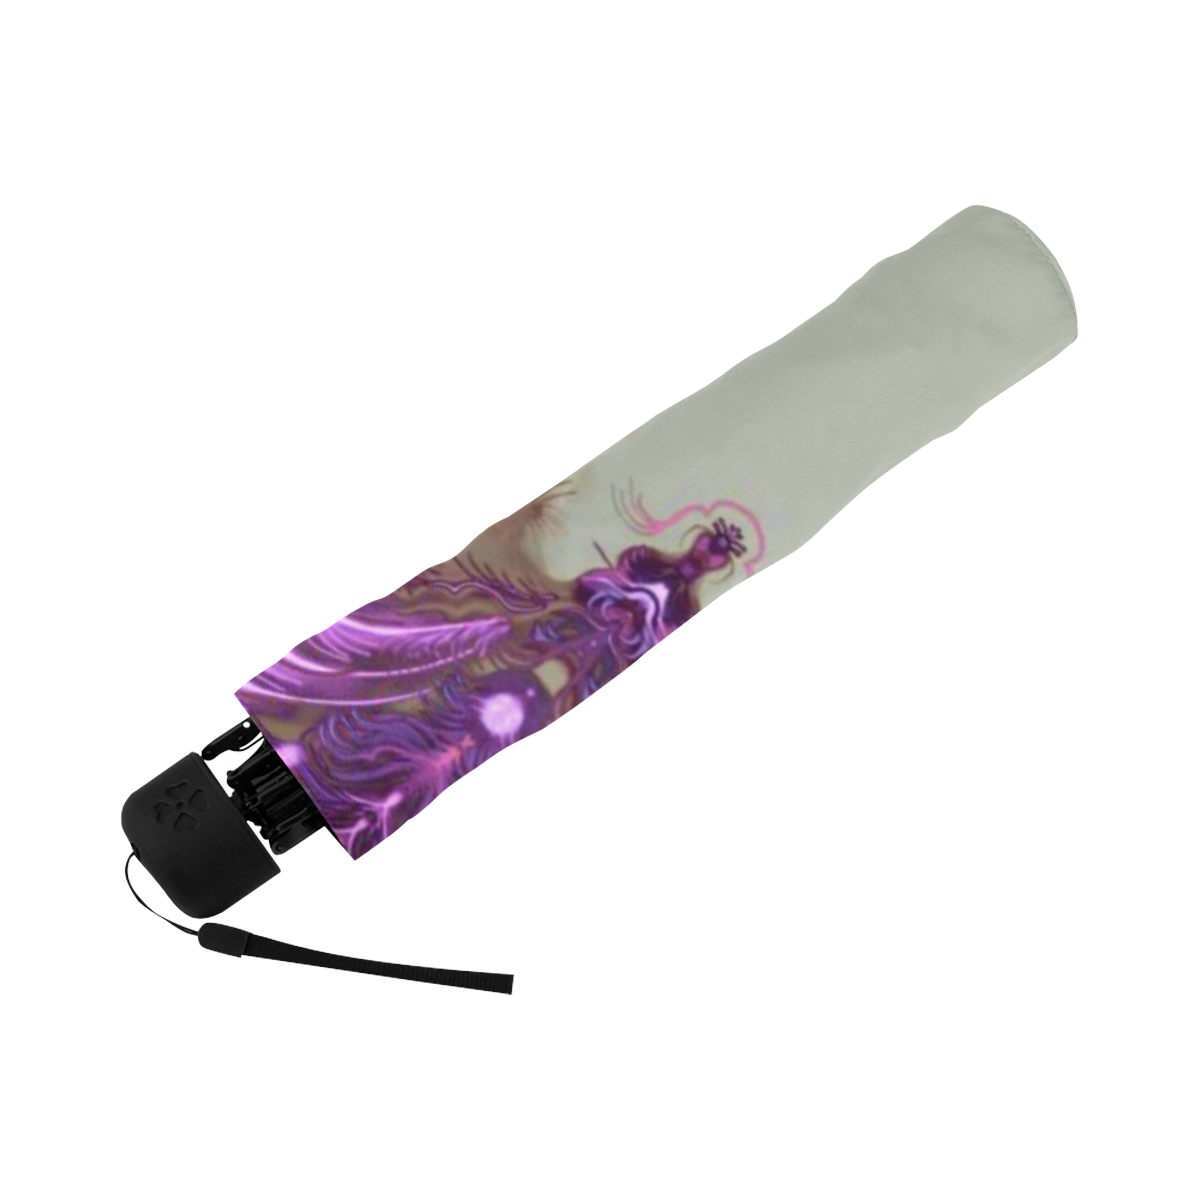 903 Anti-UV Foldable Umbrella (U08)